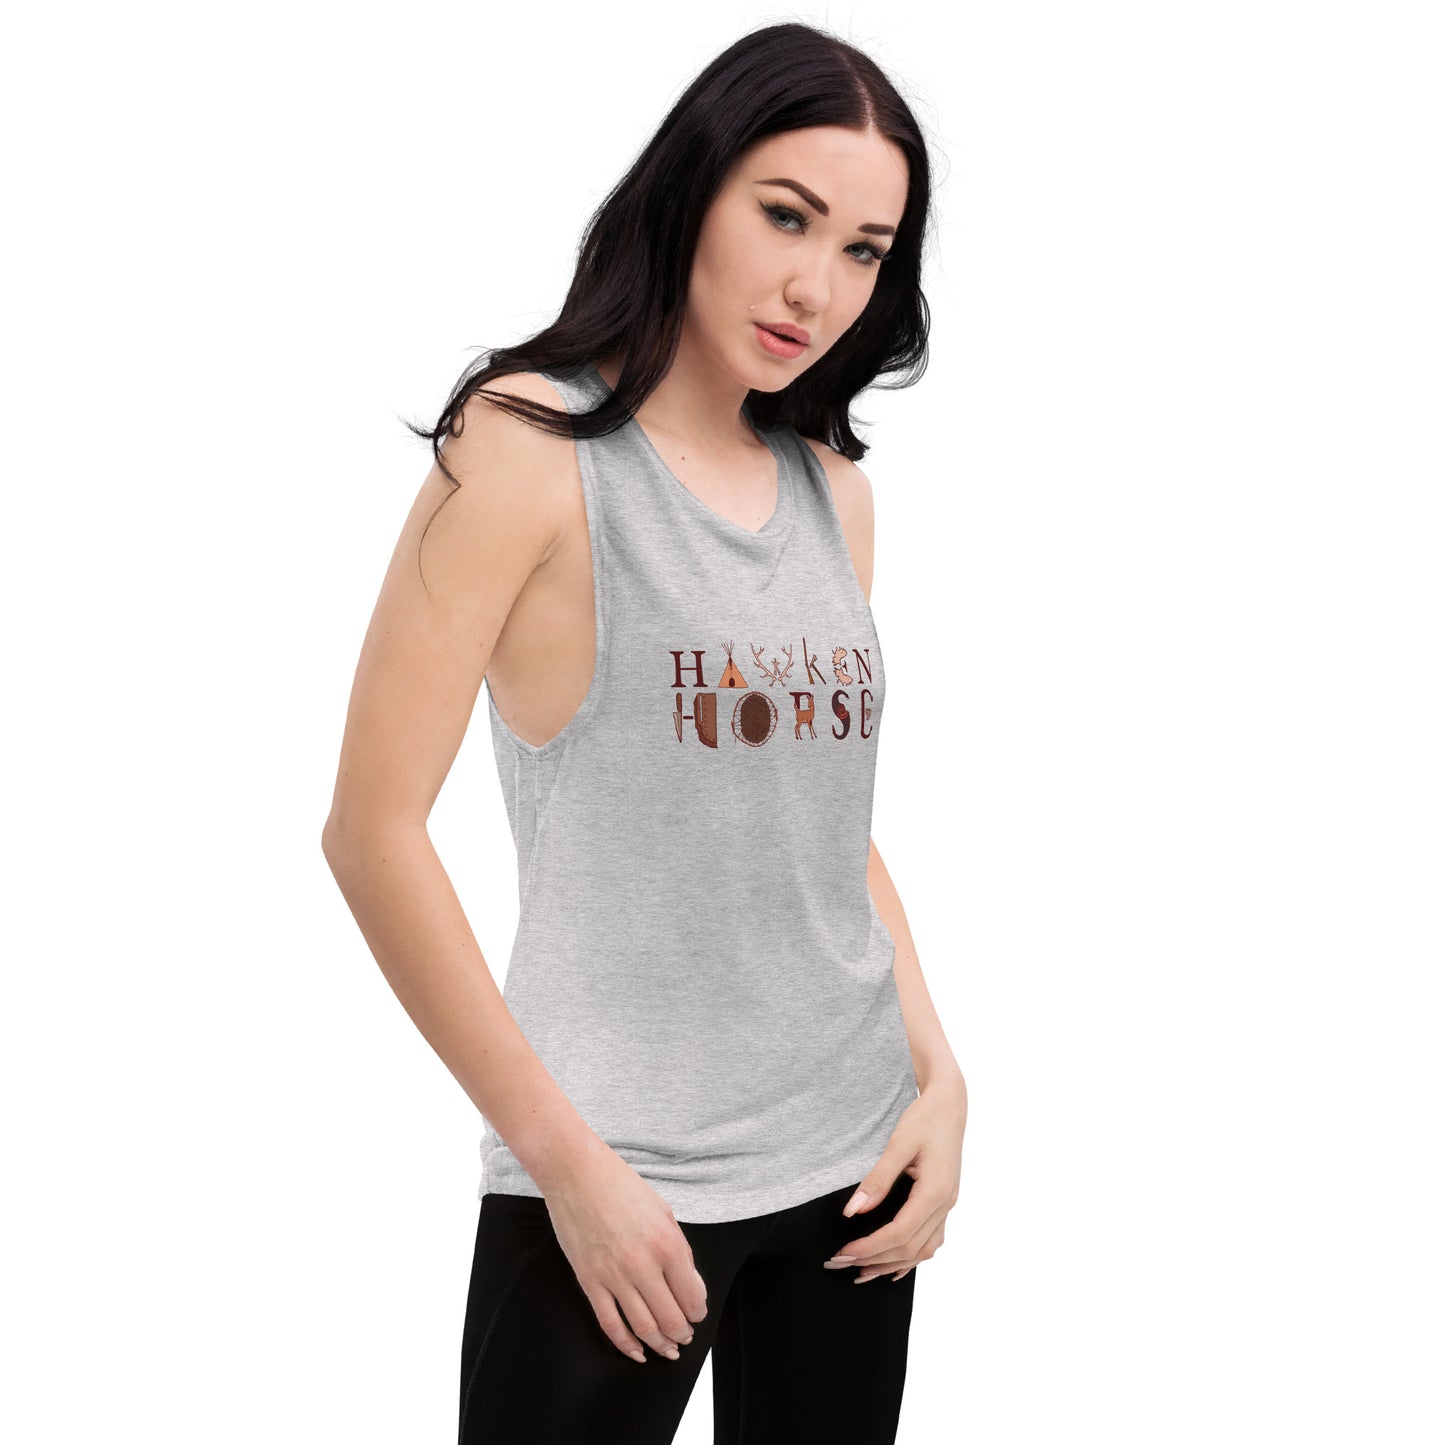 Hawken Horse Logo Ladies’ Muscle Tank